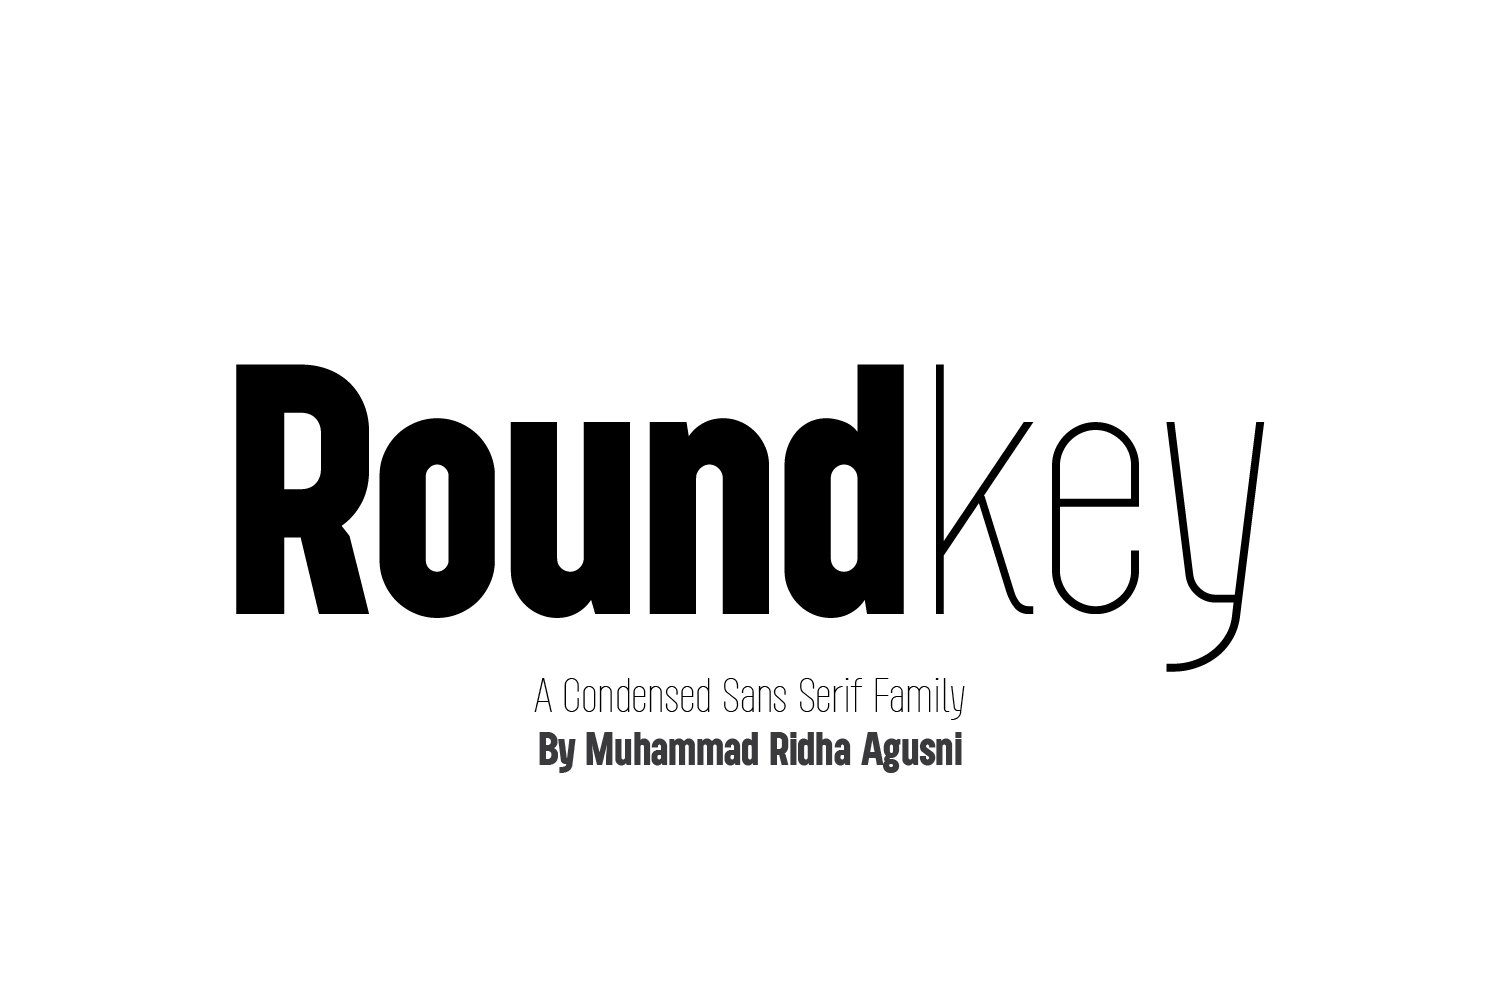 Rounkey Condensed Sans Serif Family cover image.